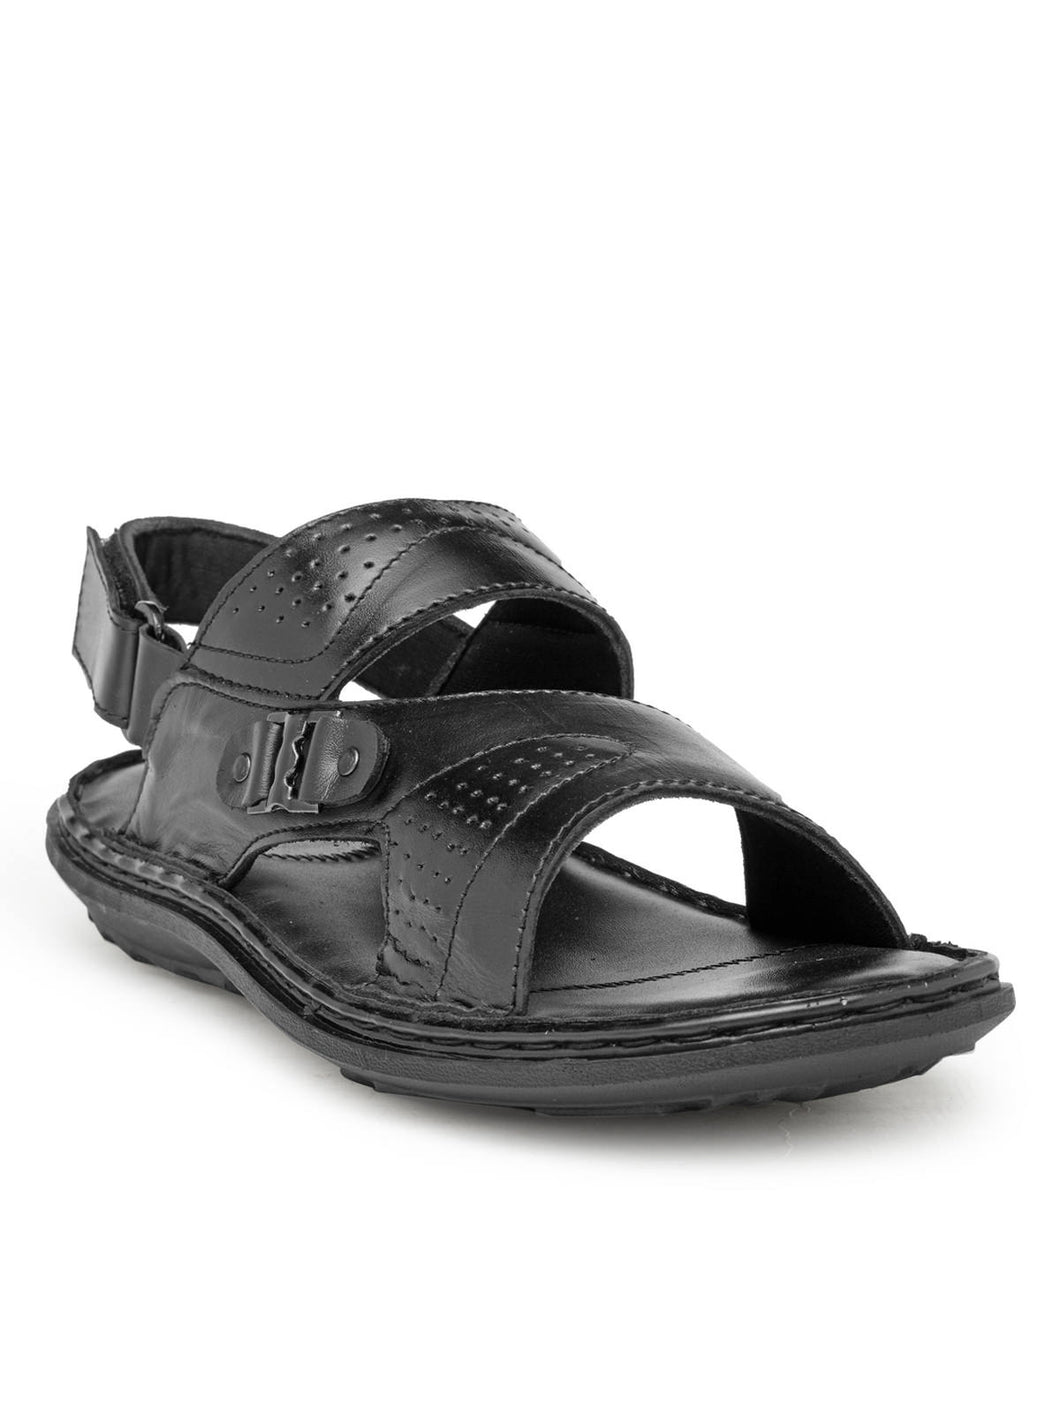 Teakwood Black Daily Wear Sandals